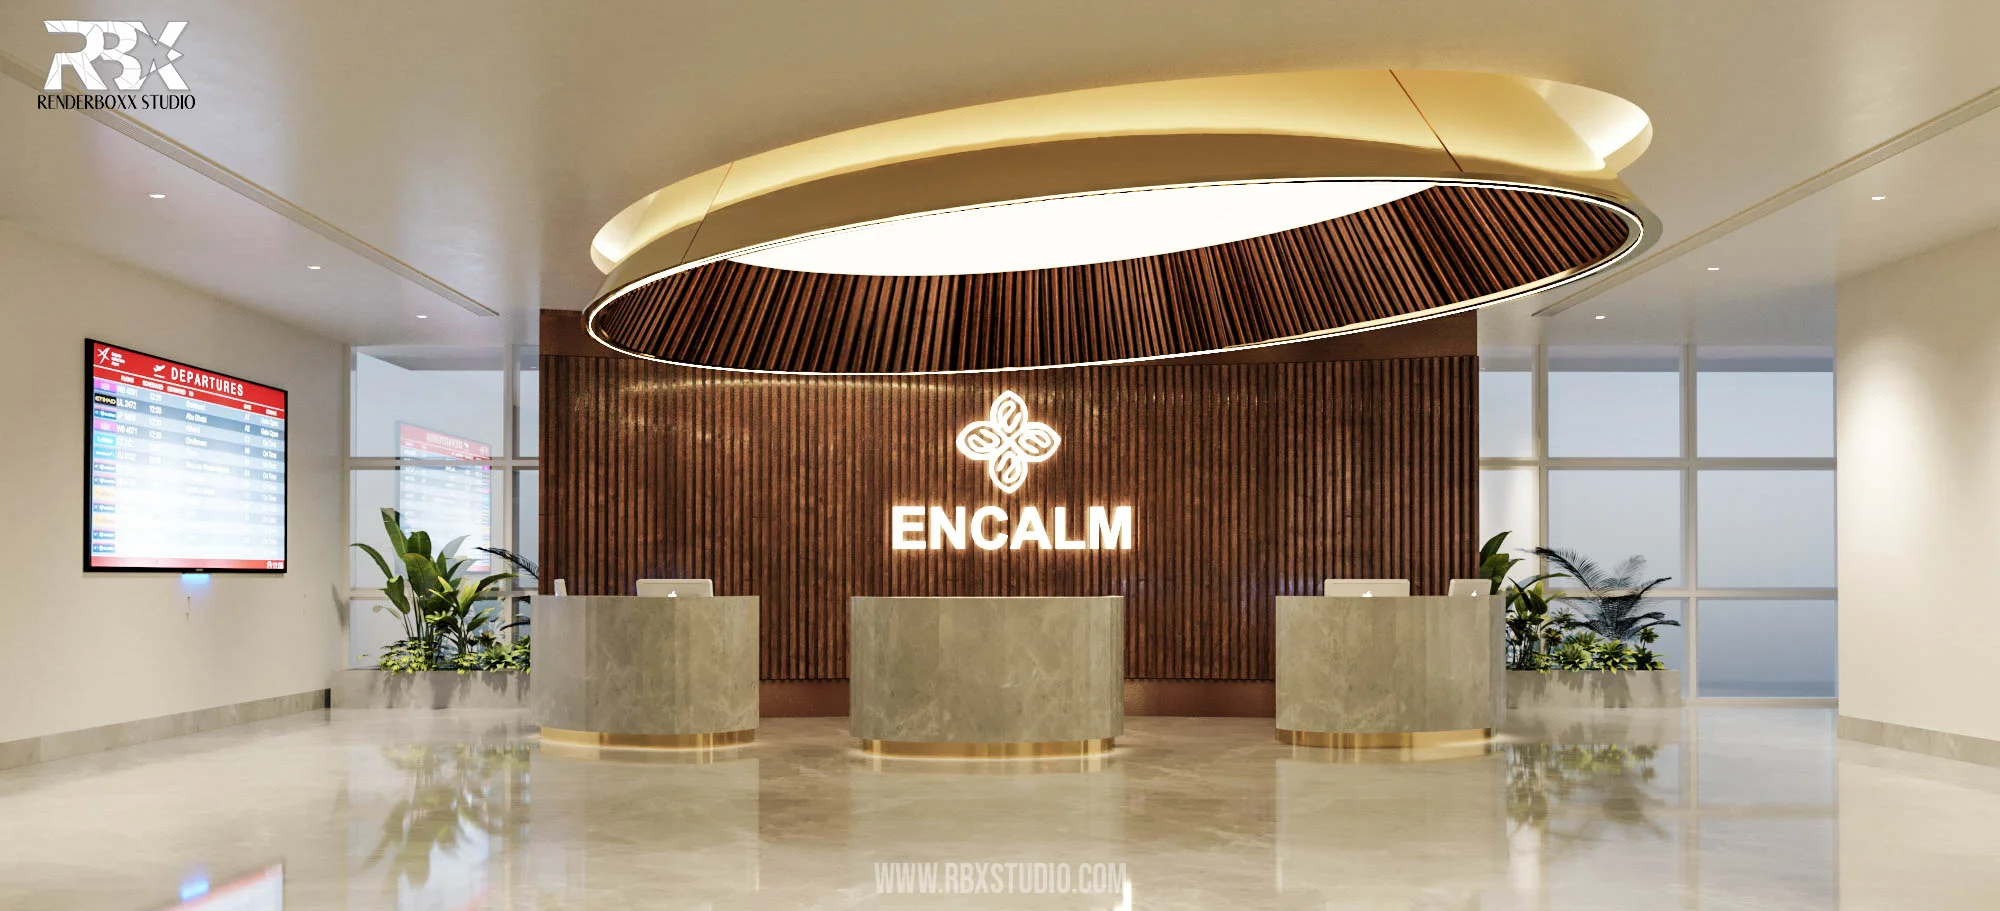 Encalm Lounge T3 Indira Gandhi International Airport Delhi